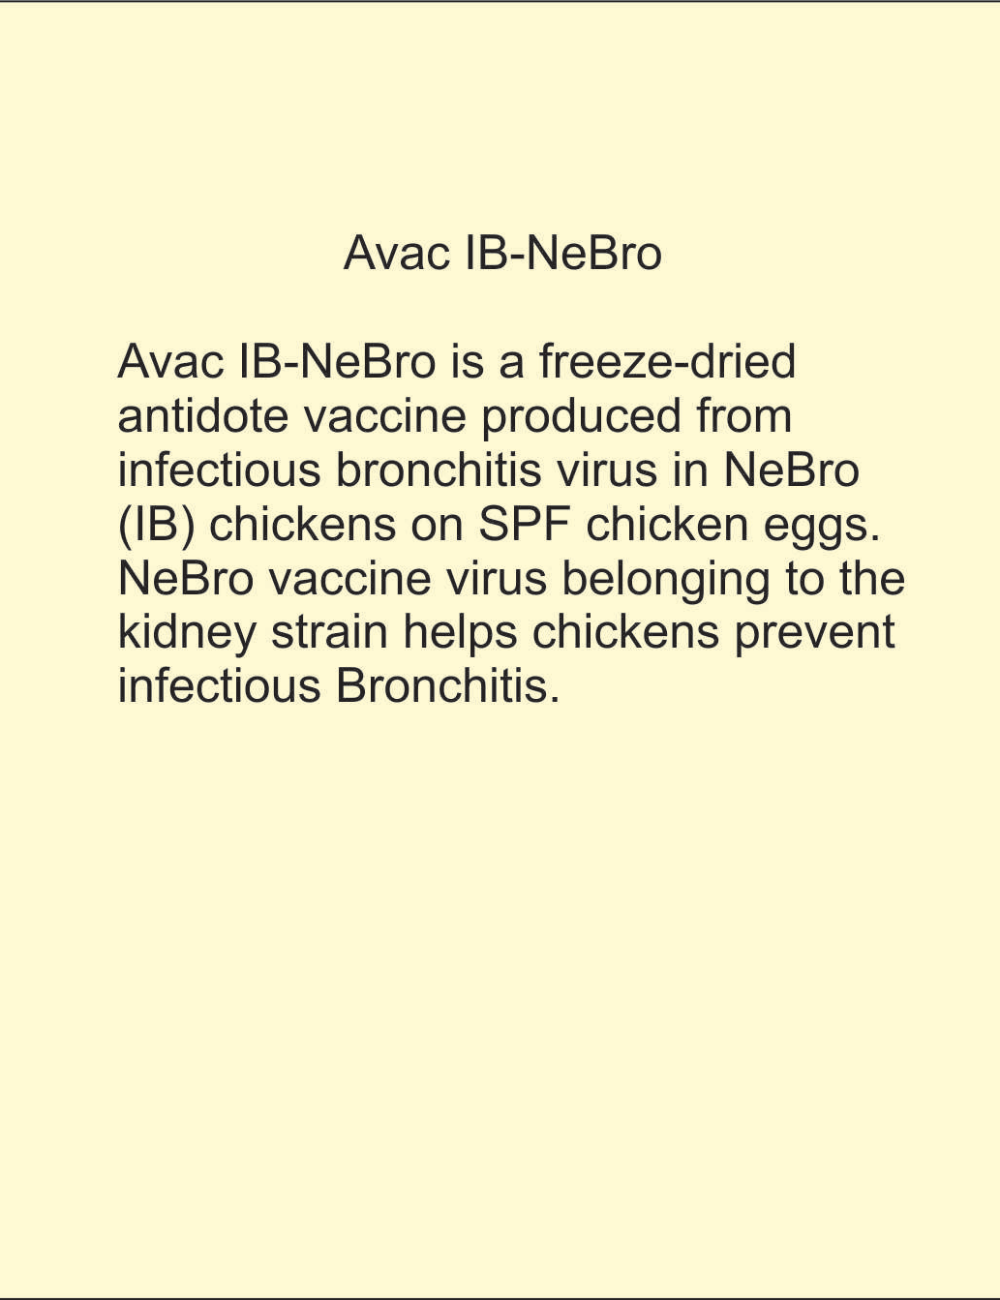 AVAC IB-NEBRO